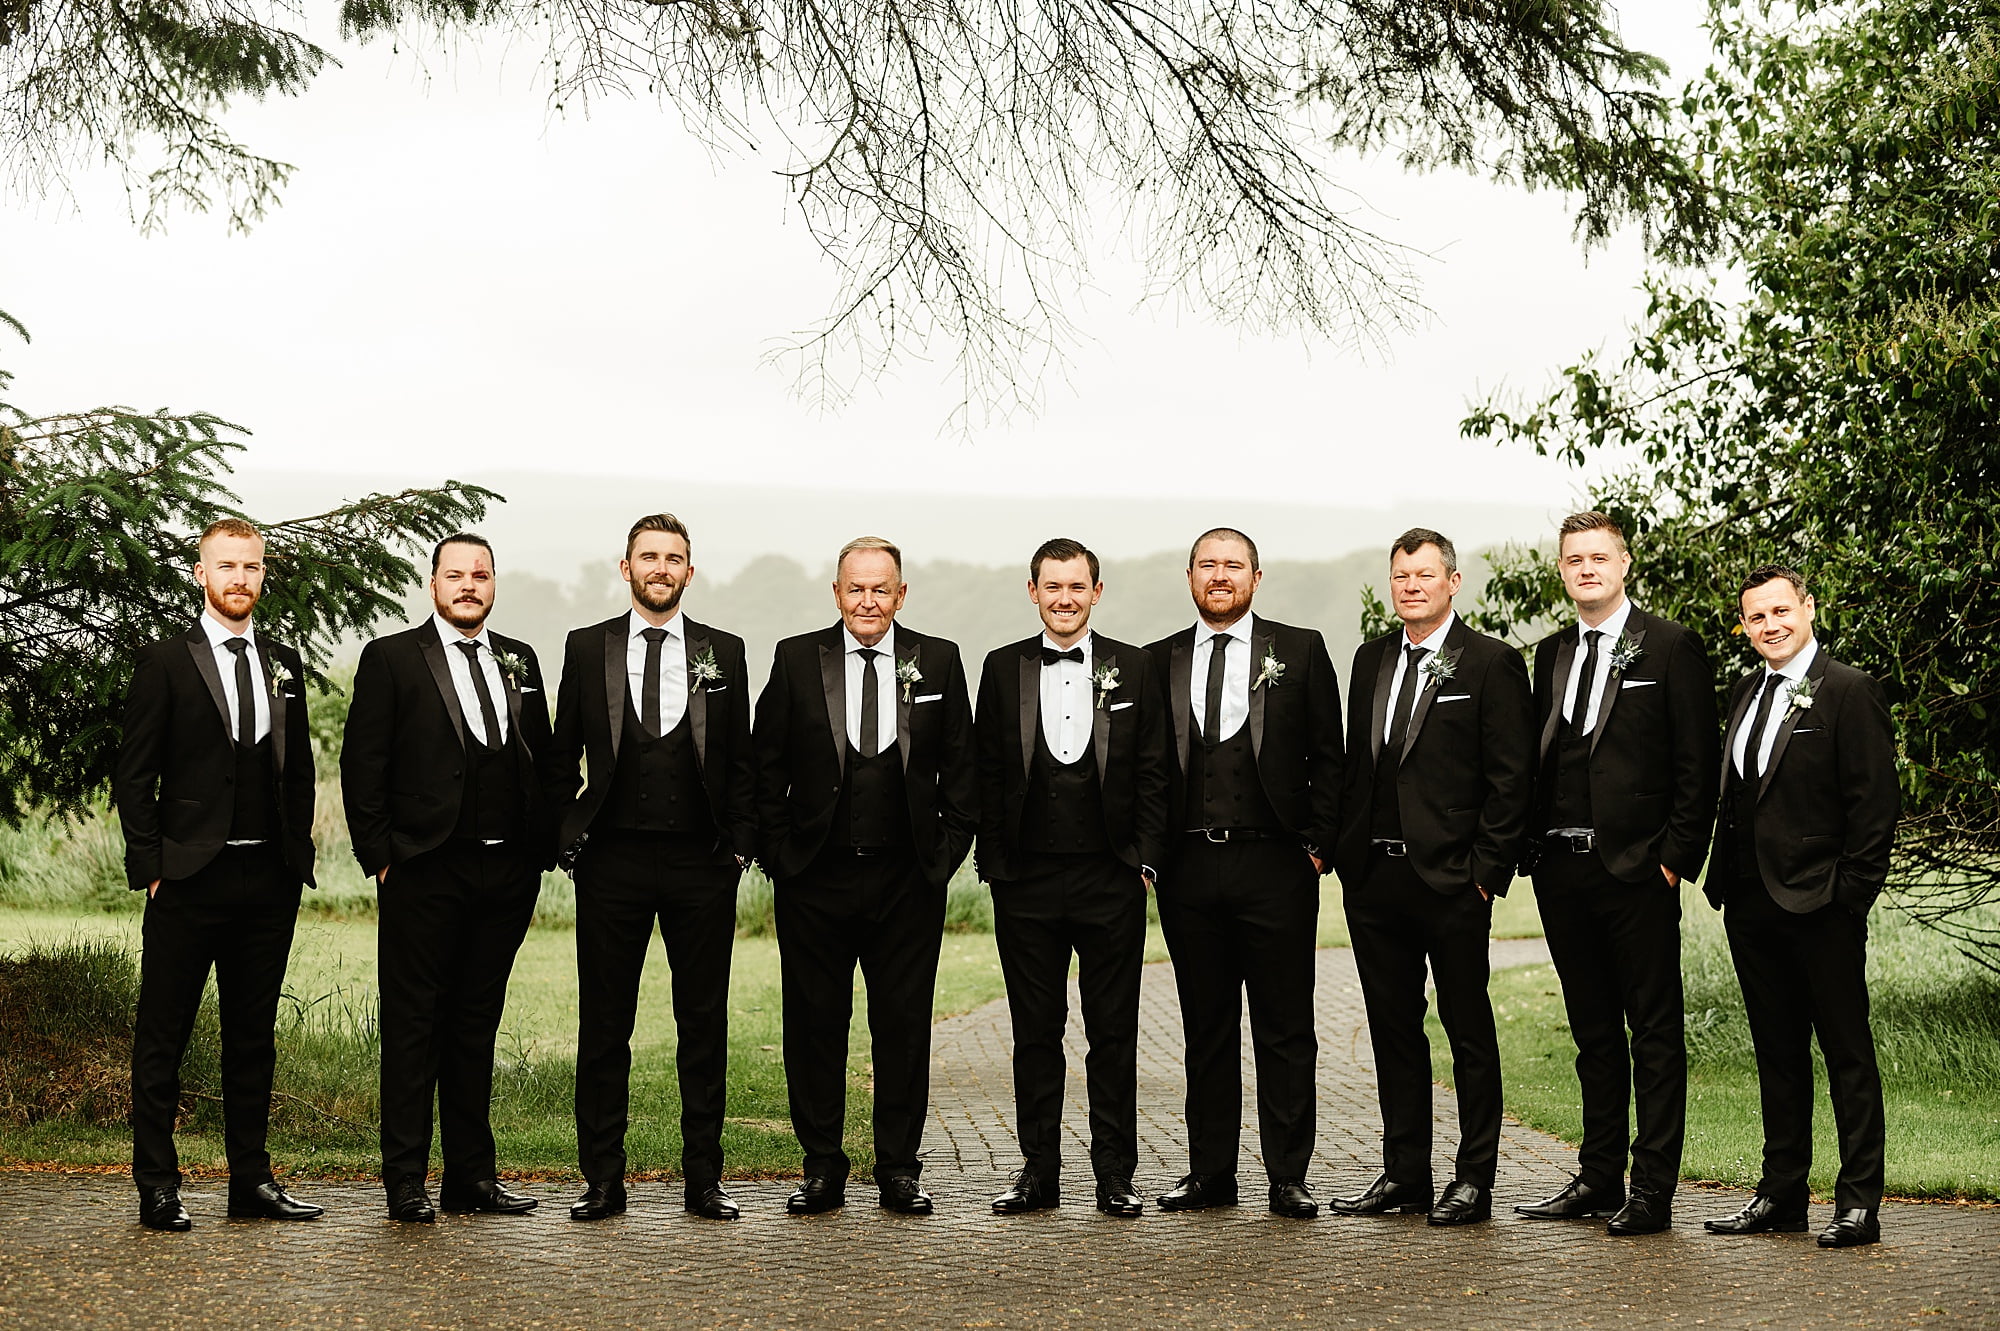 highwards estate groom and groomsmen black tie suits group photos outside